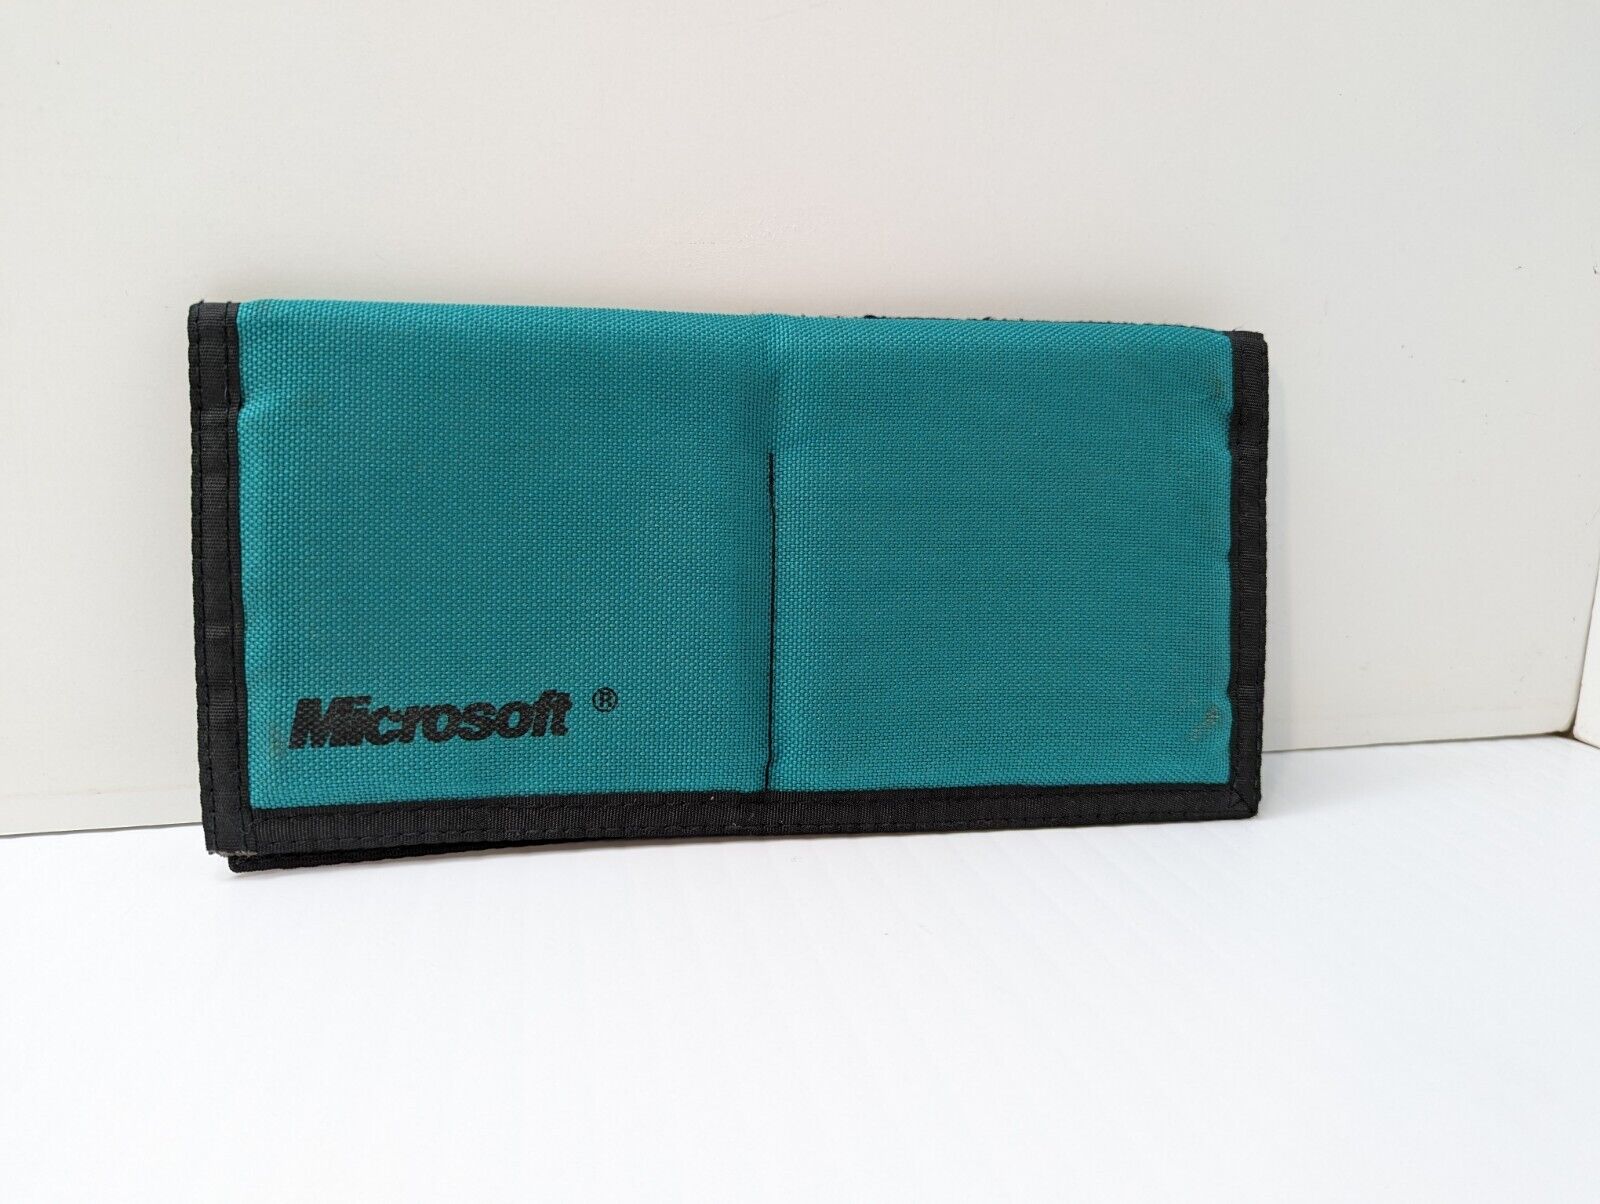 Vintage Microsoft 4 Pocket Foldable Hook And Loop Soft Case Teal Green 9\